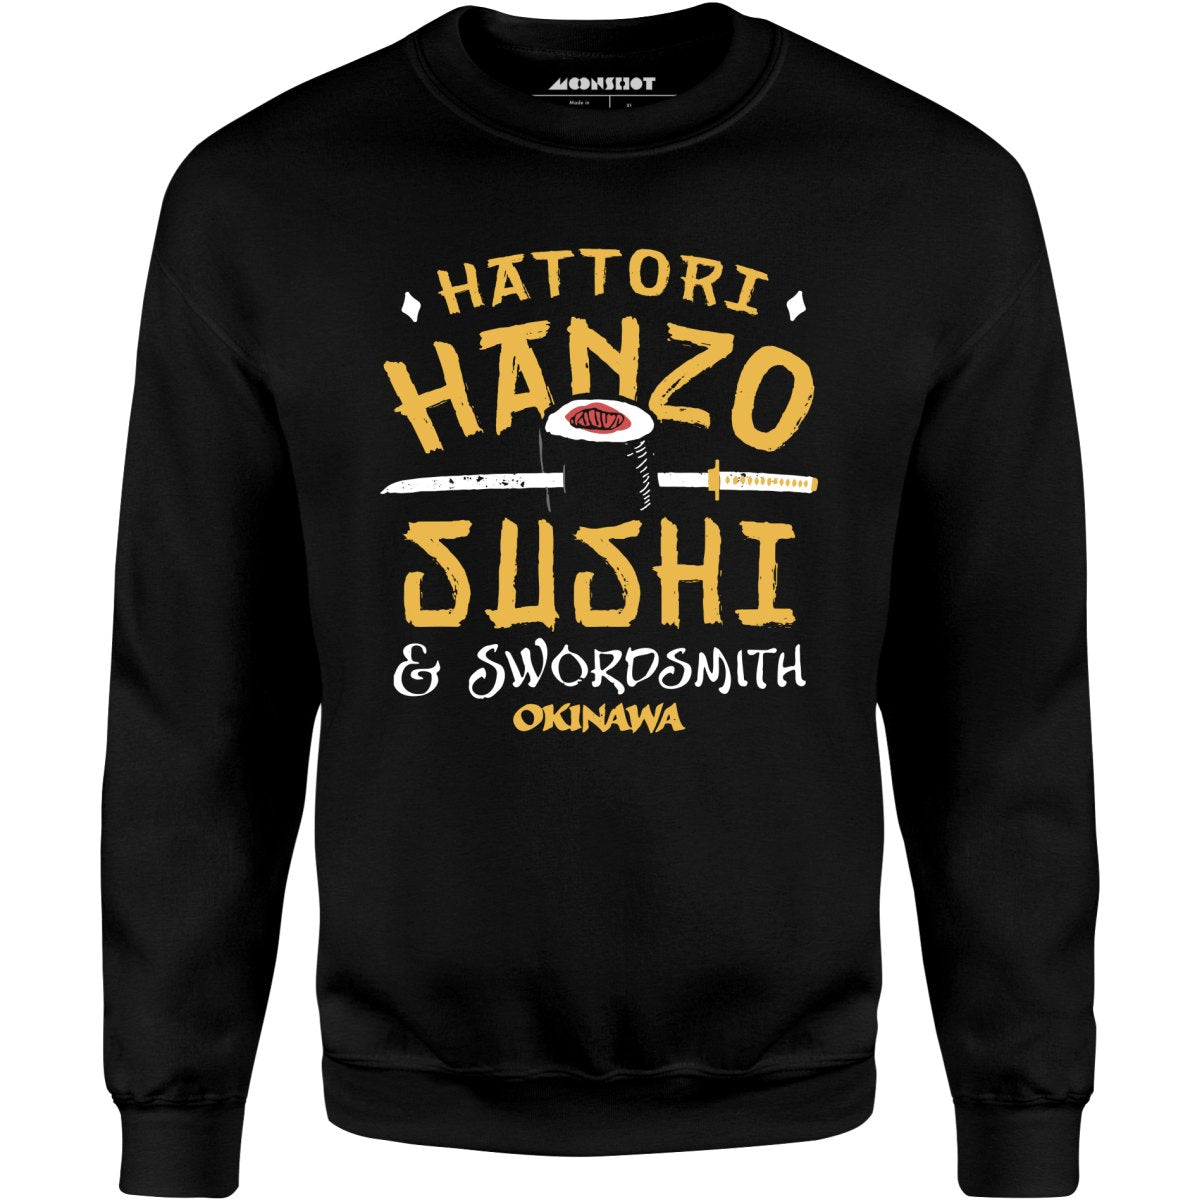 Hattori Hanzo Sushi & Swordsmith - Unisex Sweatshirt